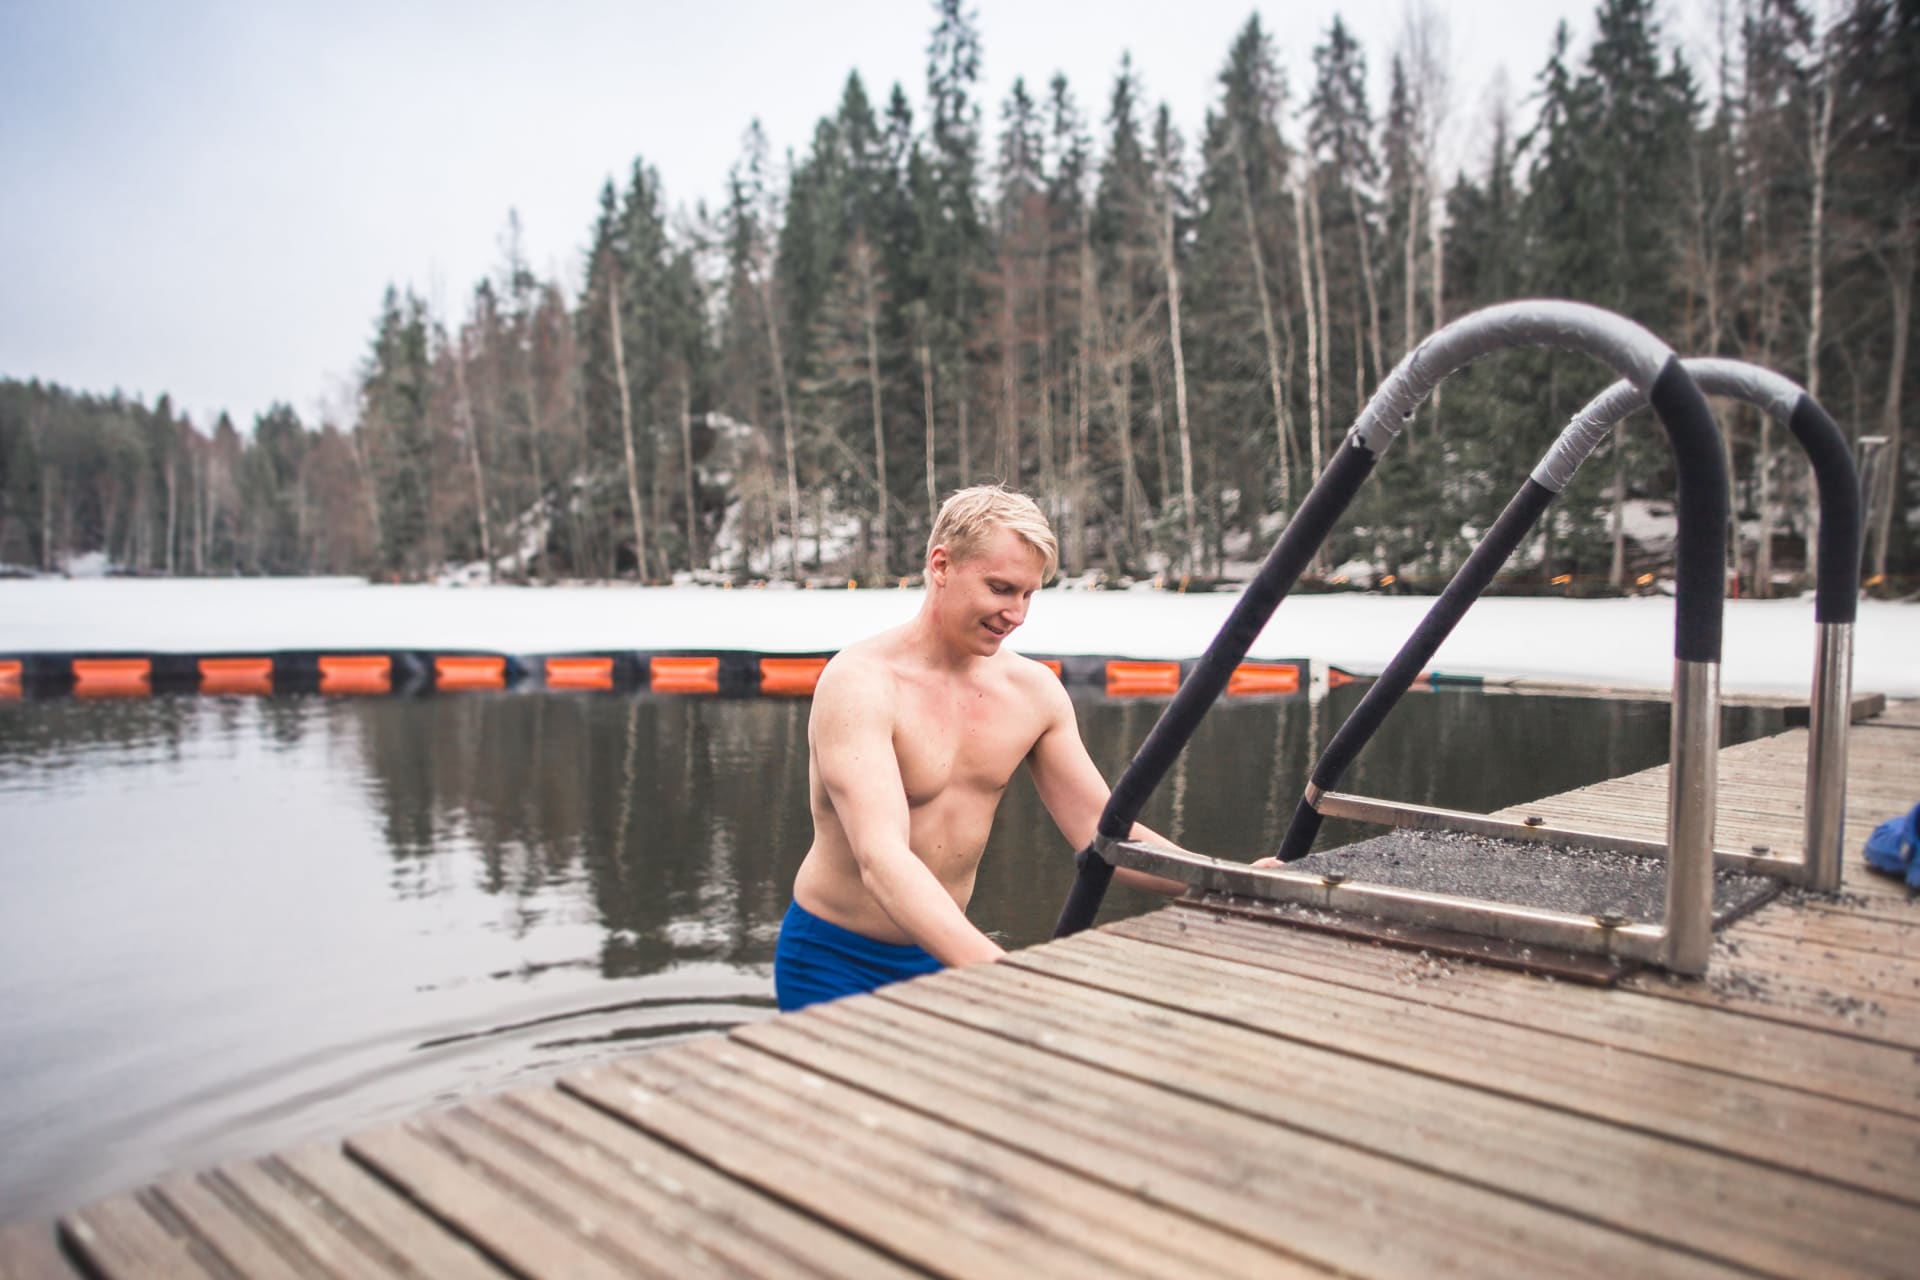 Winter swimming in the Suolijärvi lake.